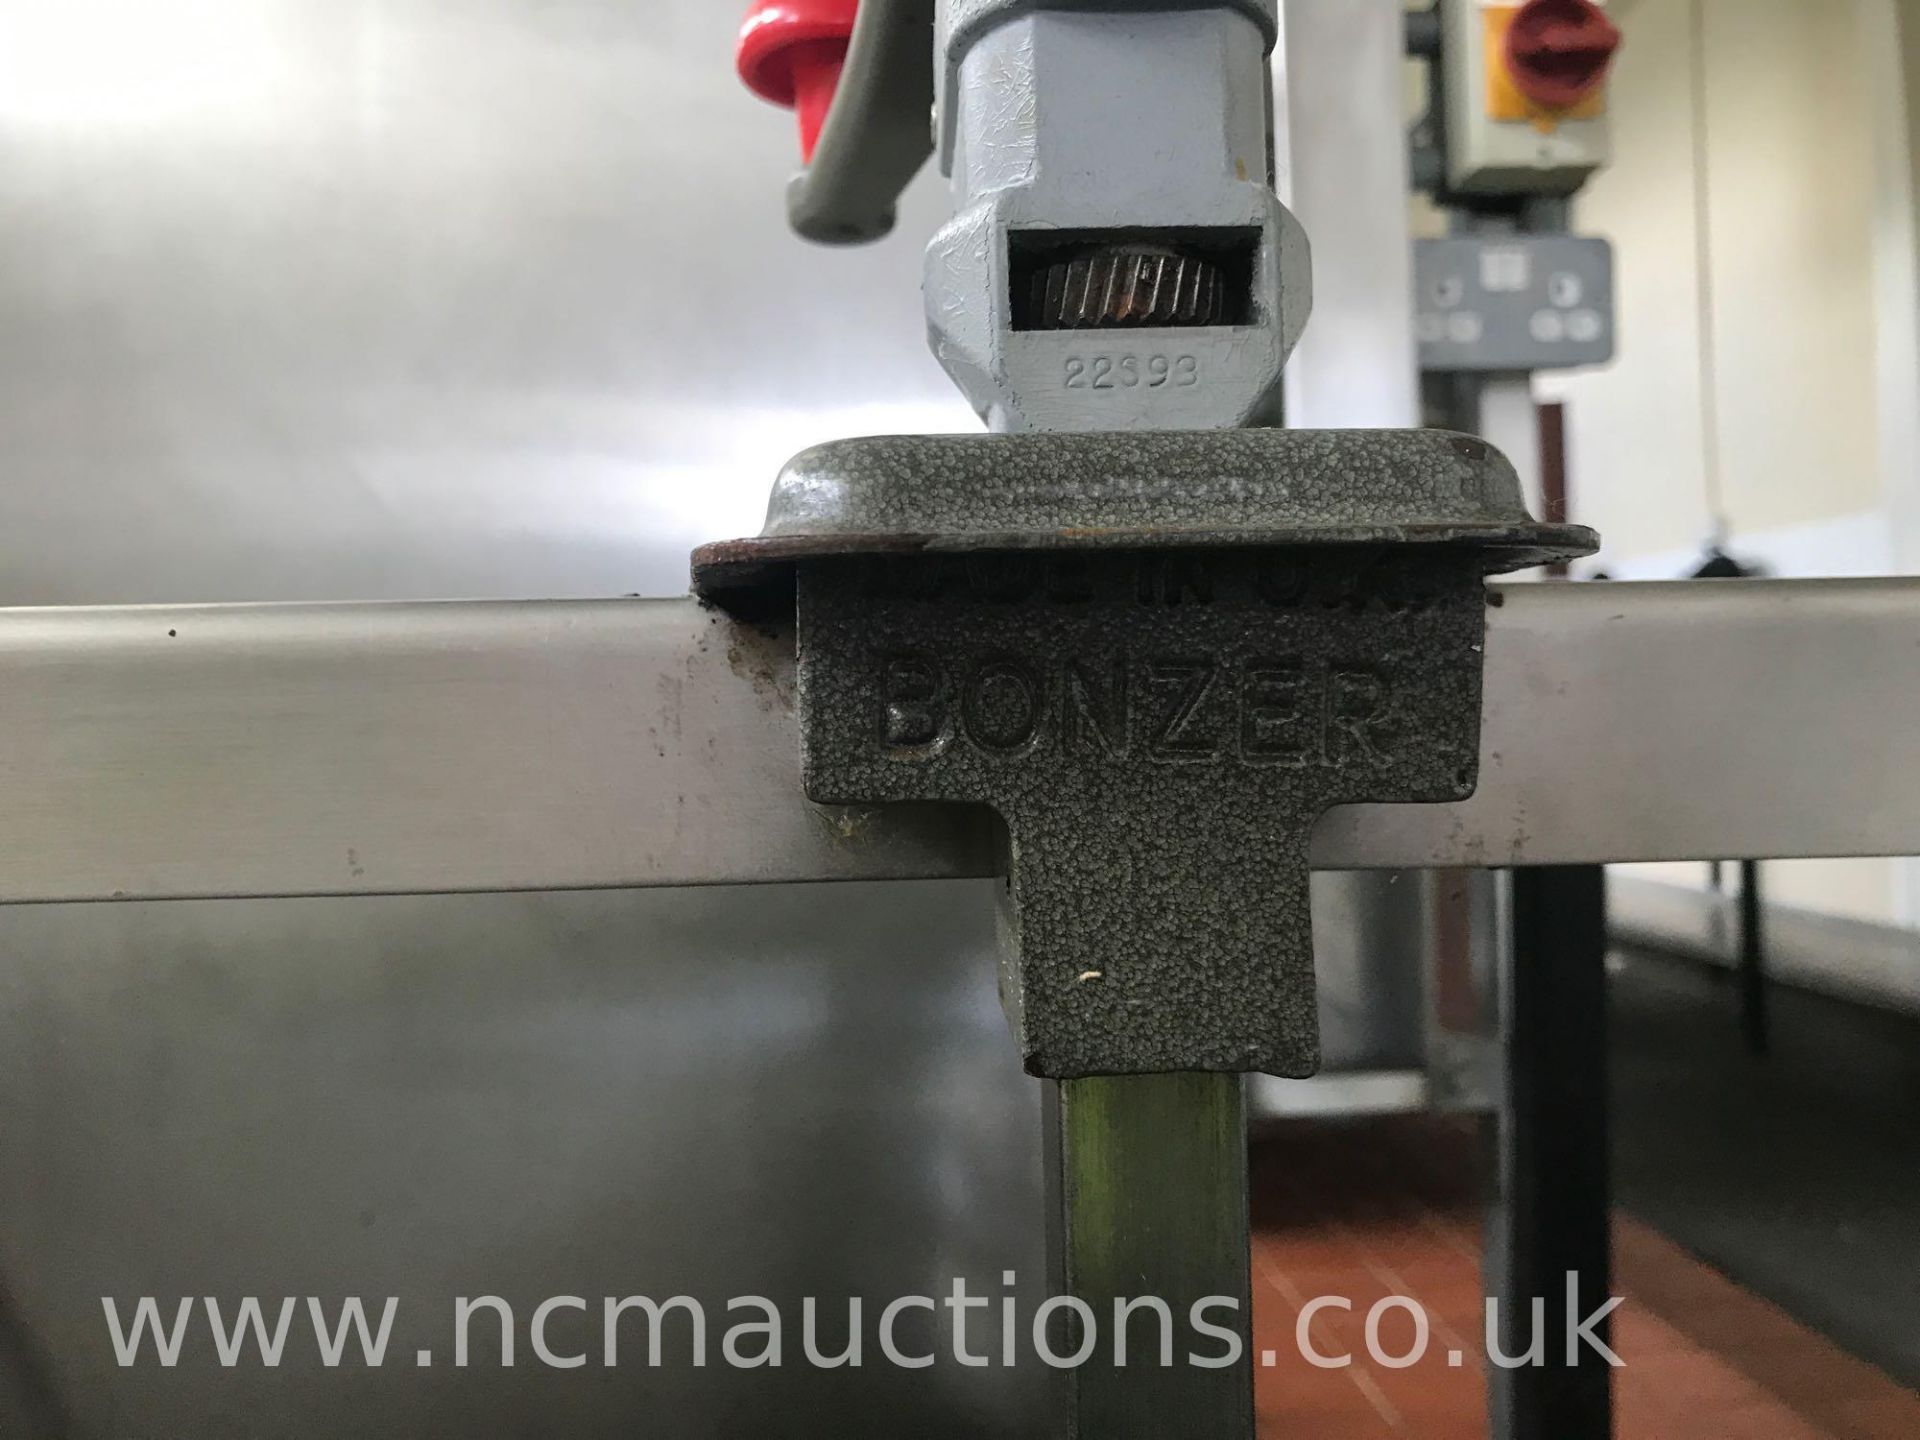 Stainless Steel Countertop & Industrial Tin Opener - Image 3 of 3